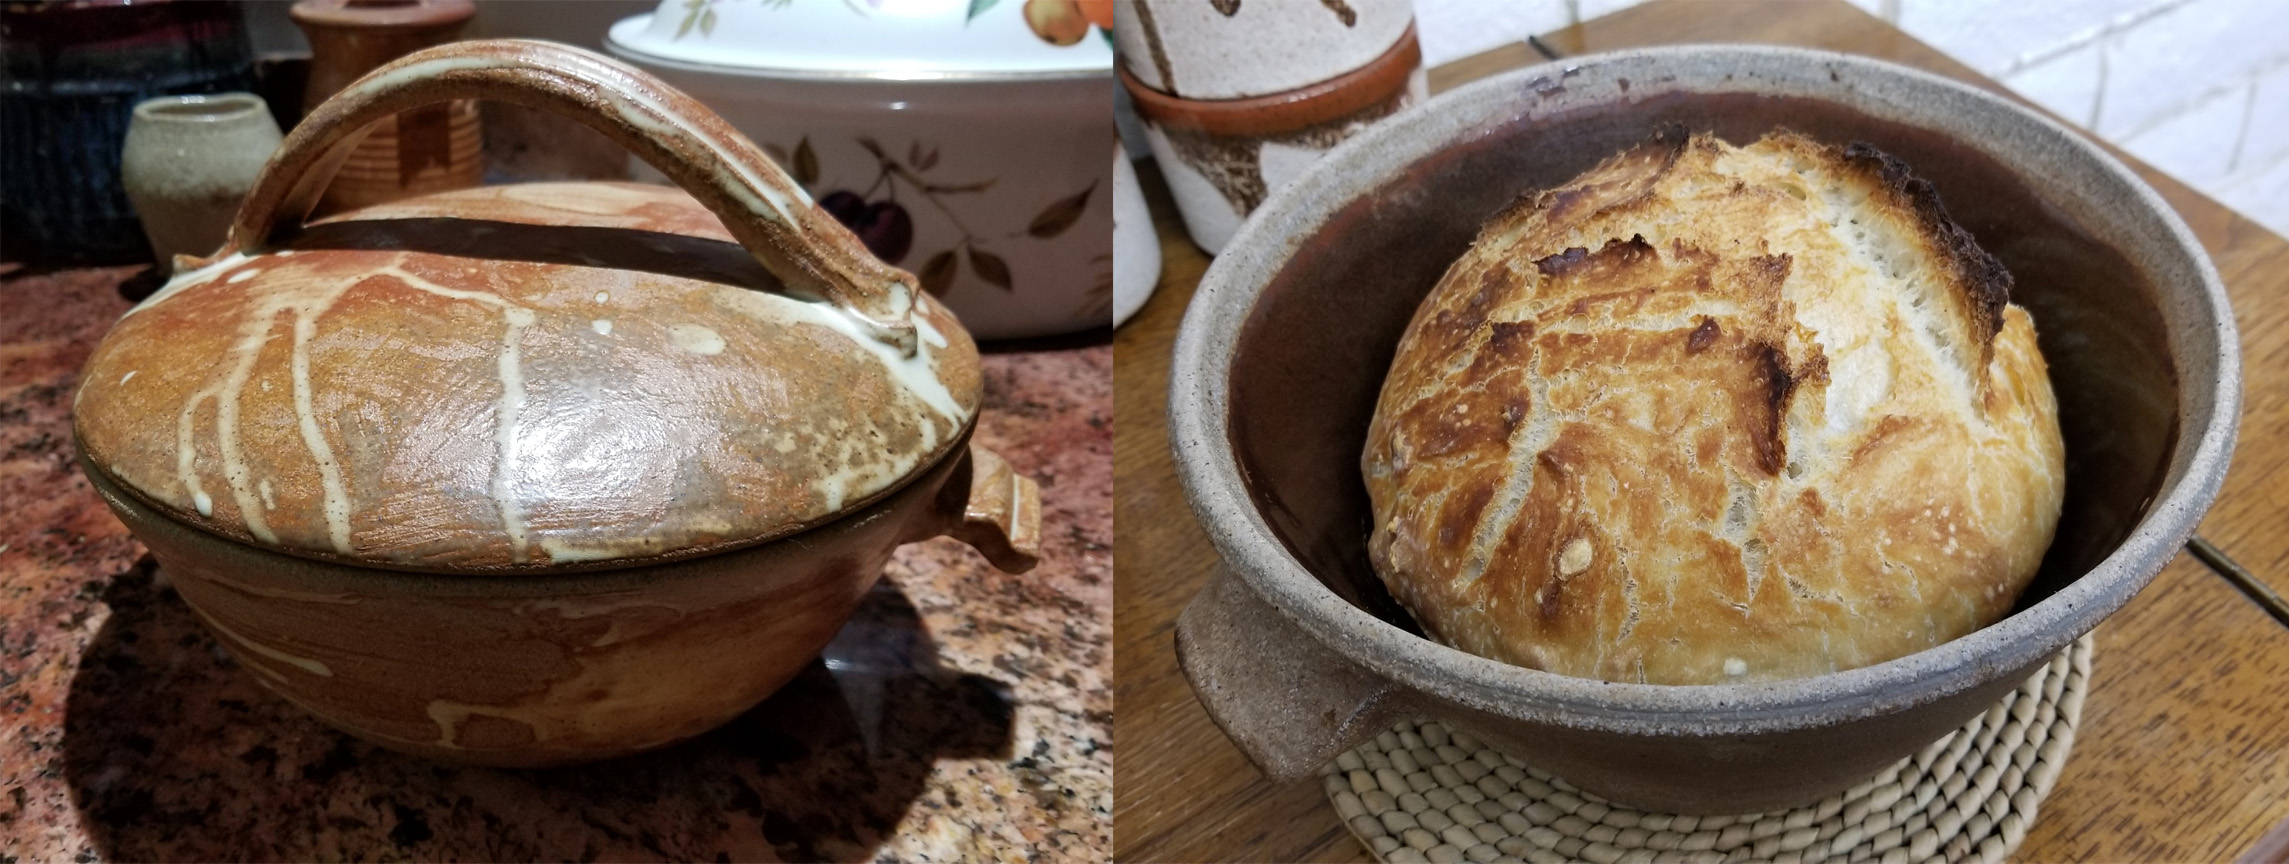 Baked bread made in one of Luke's ceramic bread bakers.